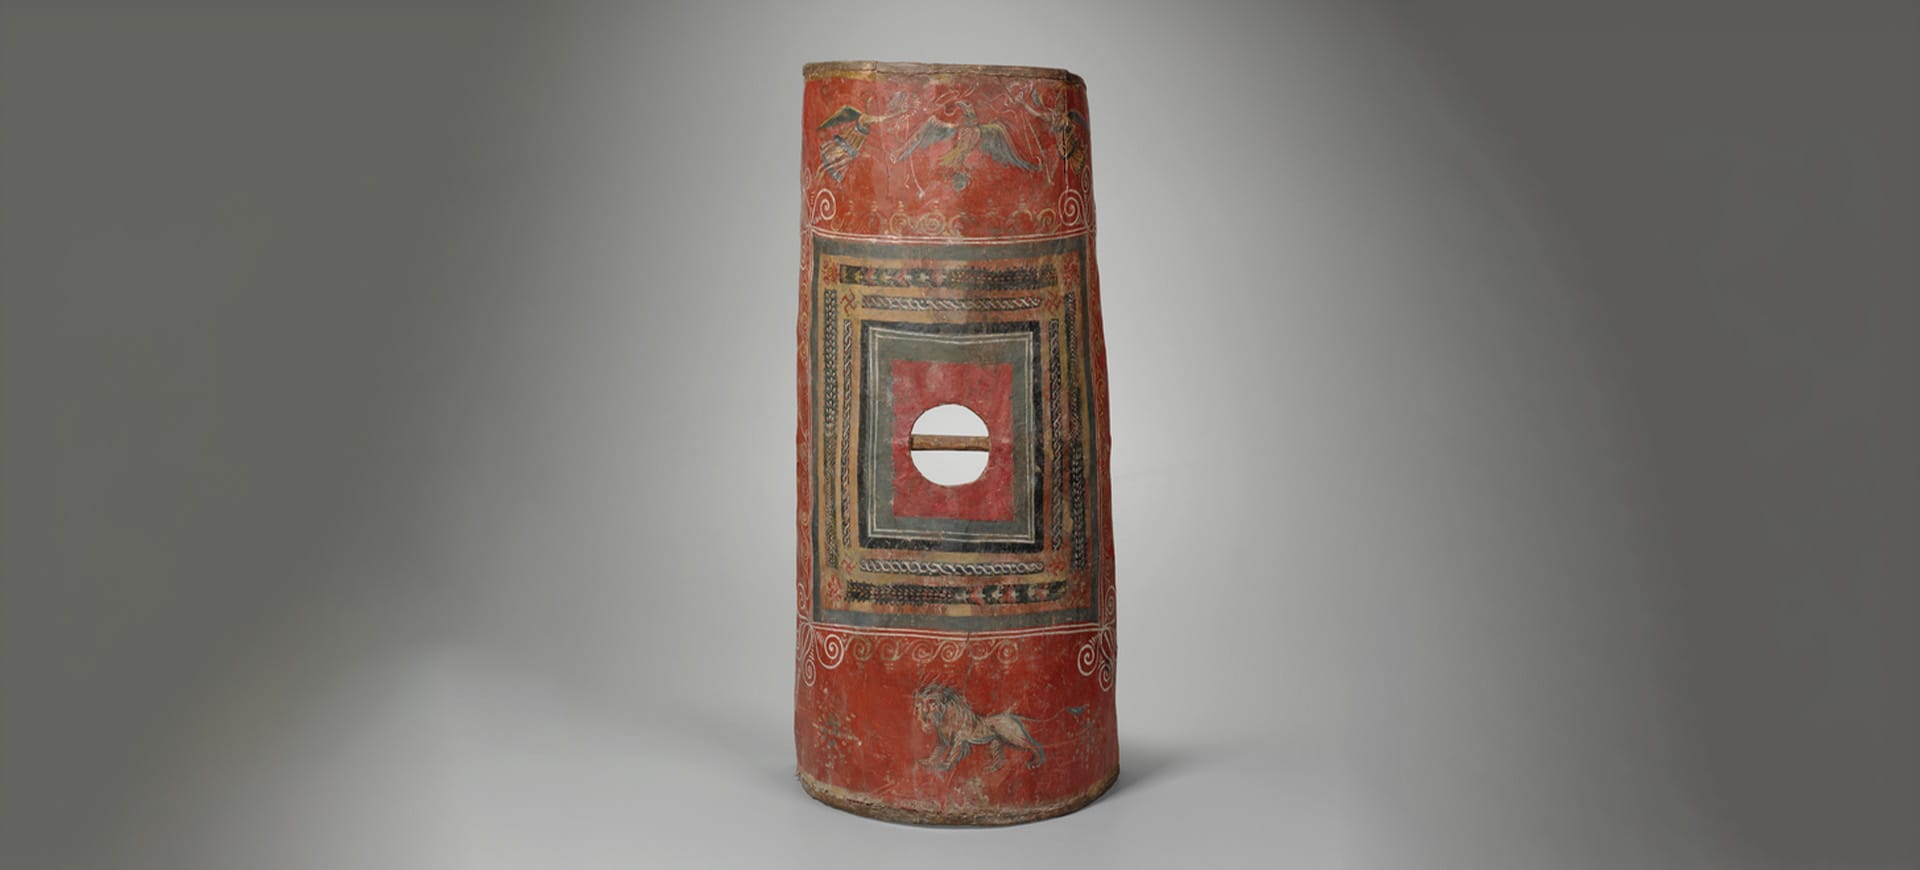 A red Roman shield